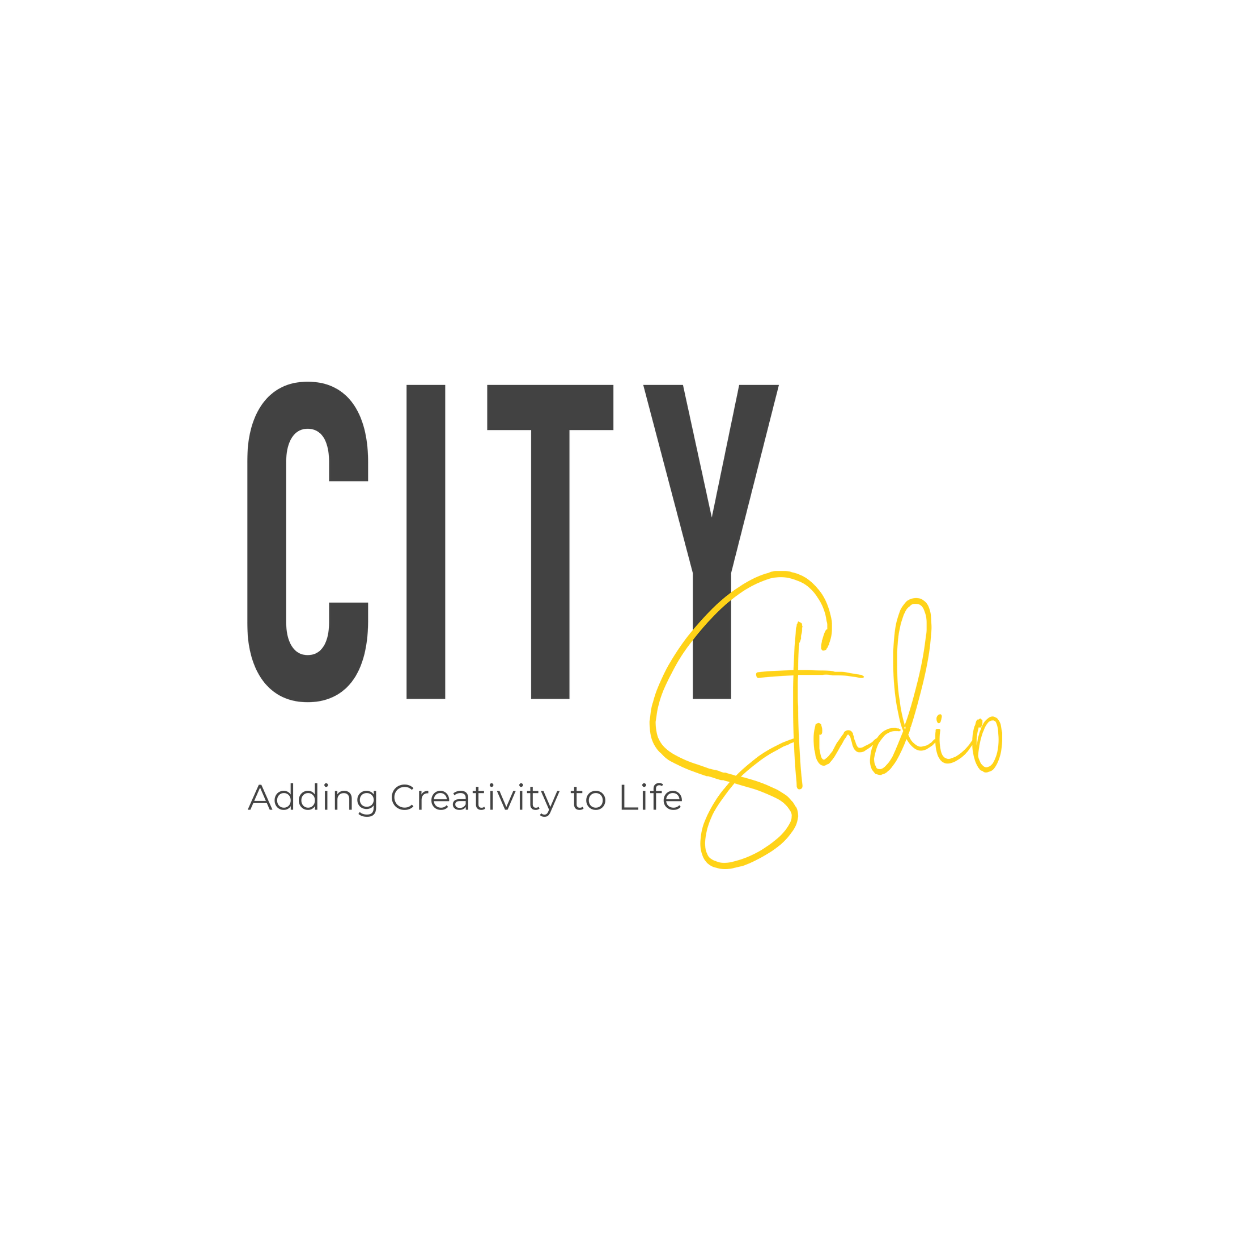 City Media Studio Logo